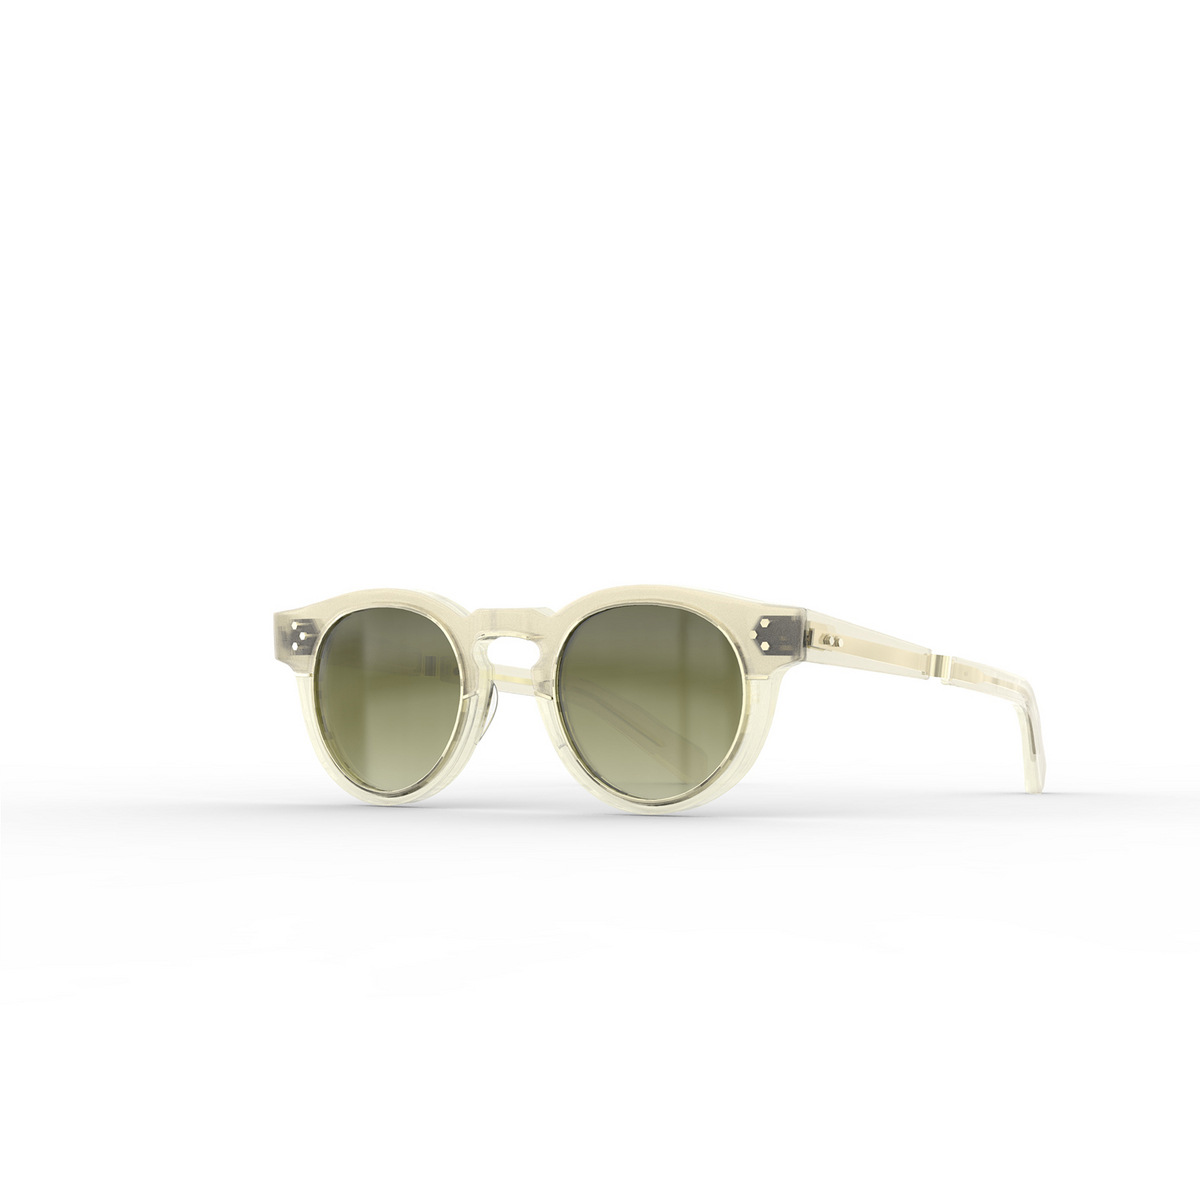 Mr. Leight KENNEDY S Sunglasses ARTCRY-12KG/ELMM Artist Crystal-12K White Gold - three-quarters view